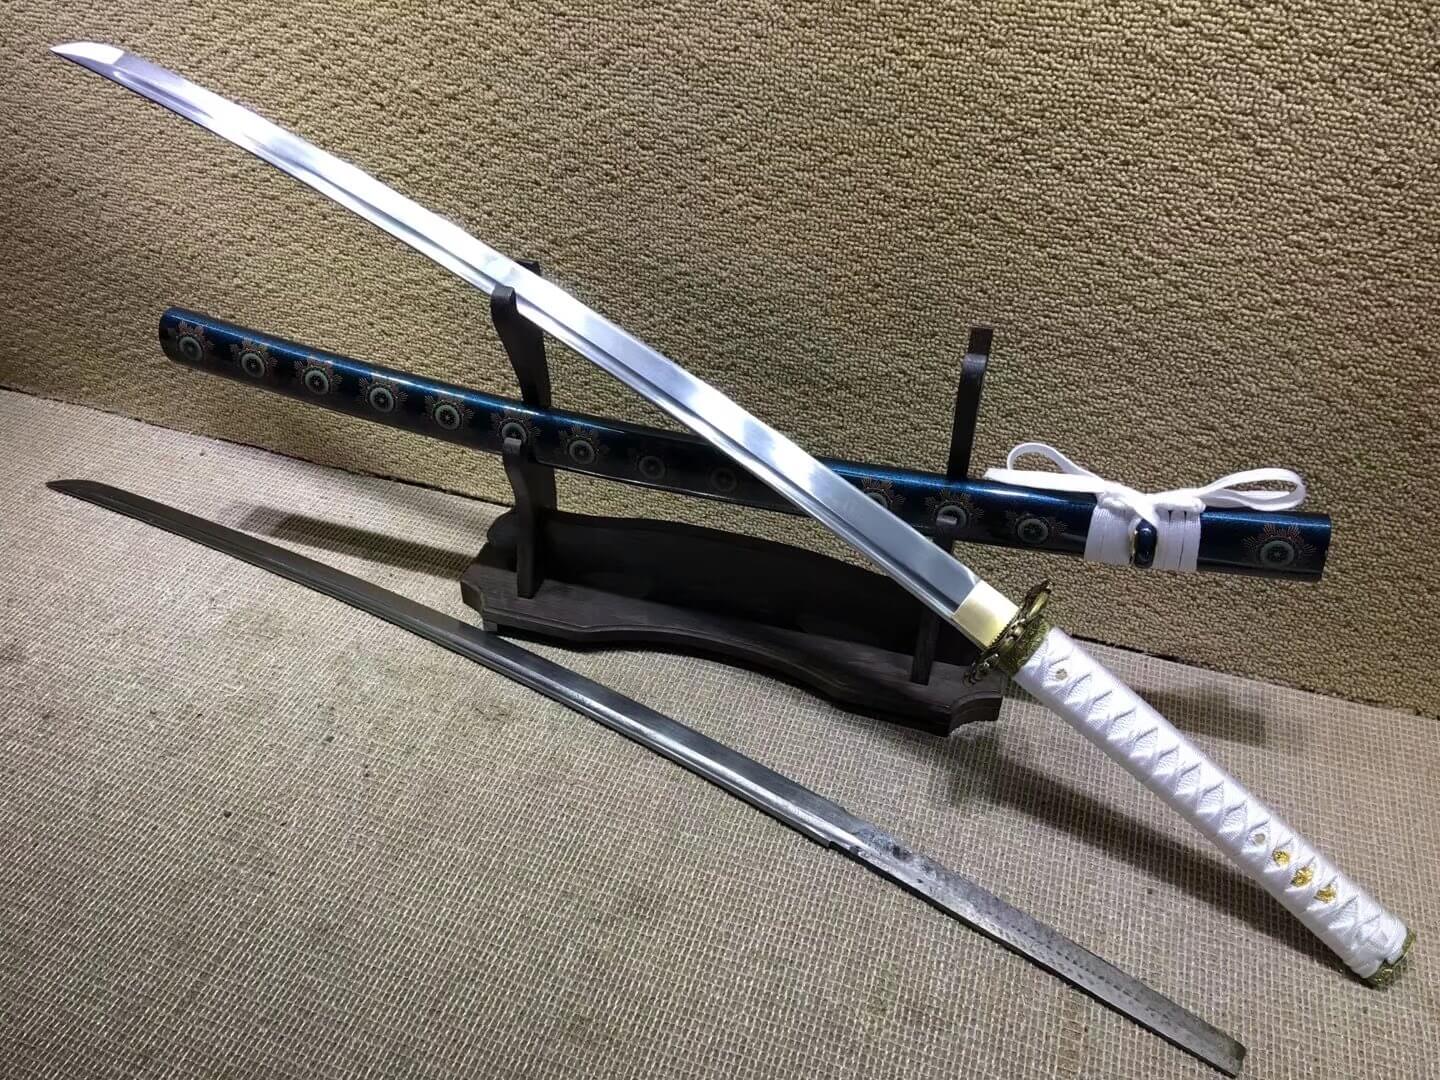 Samurai sword(Medium carbon steel bade,Wood scabbard,Alloy fittings)Length 39" - Chinese sword shop